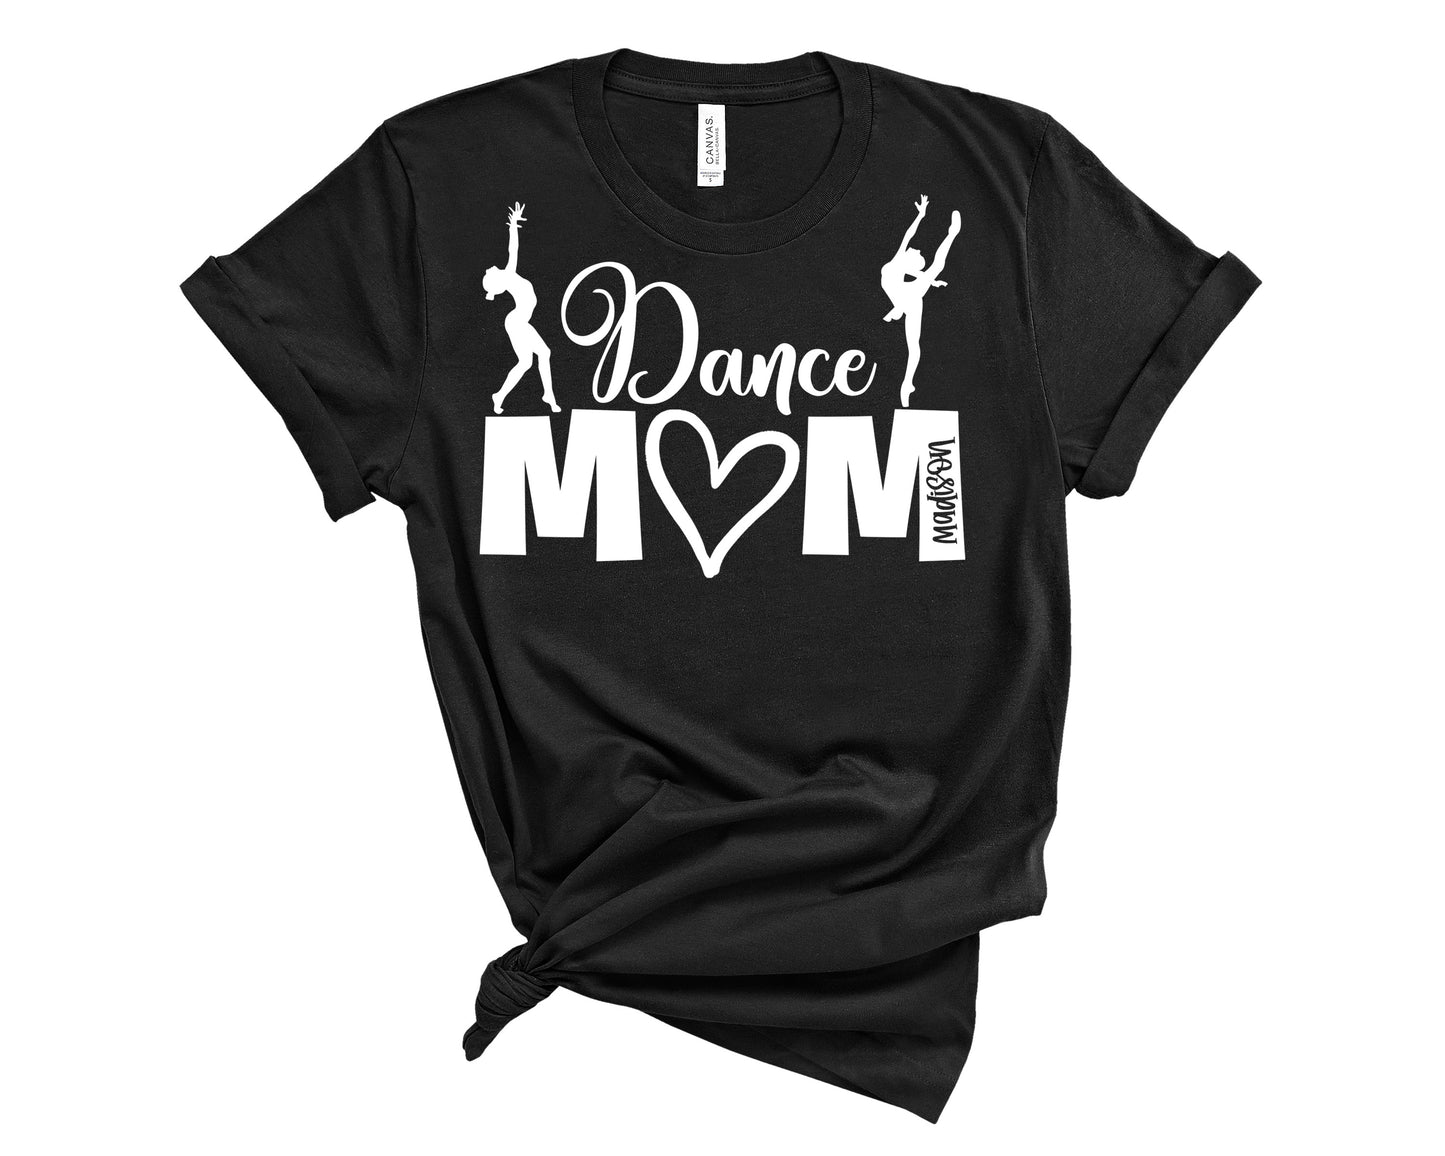 Dance Mom shirt